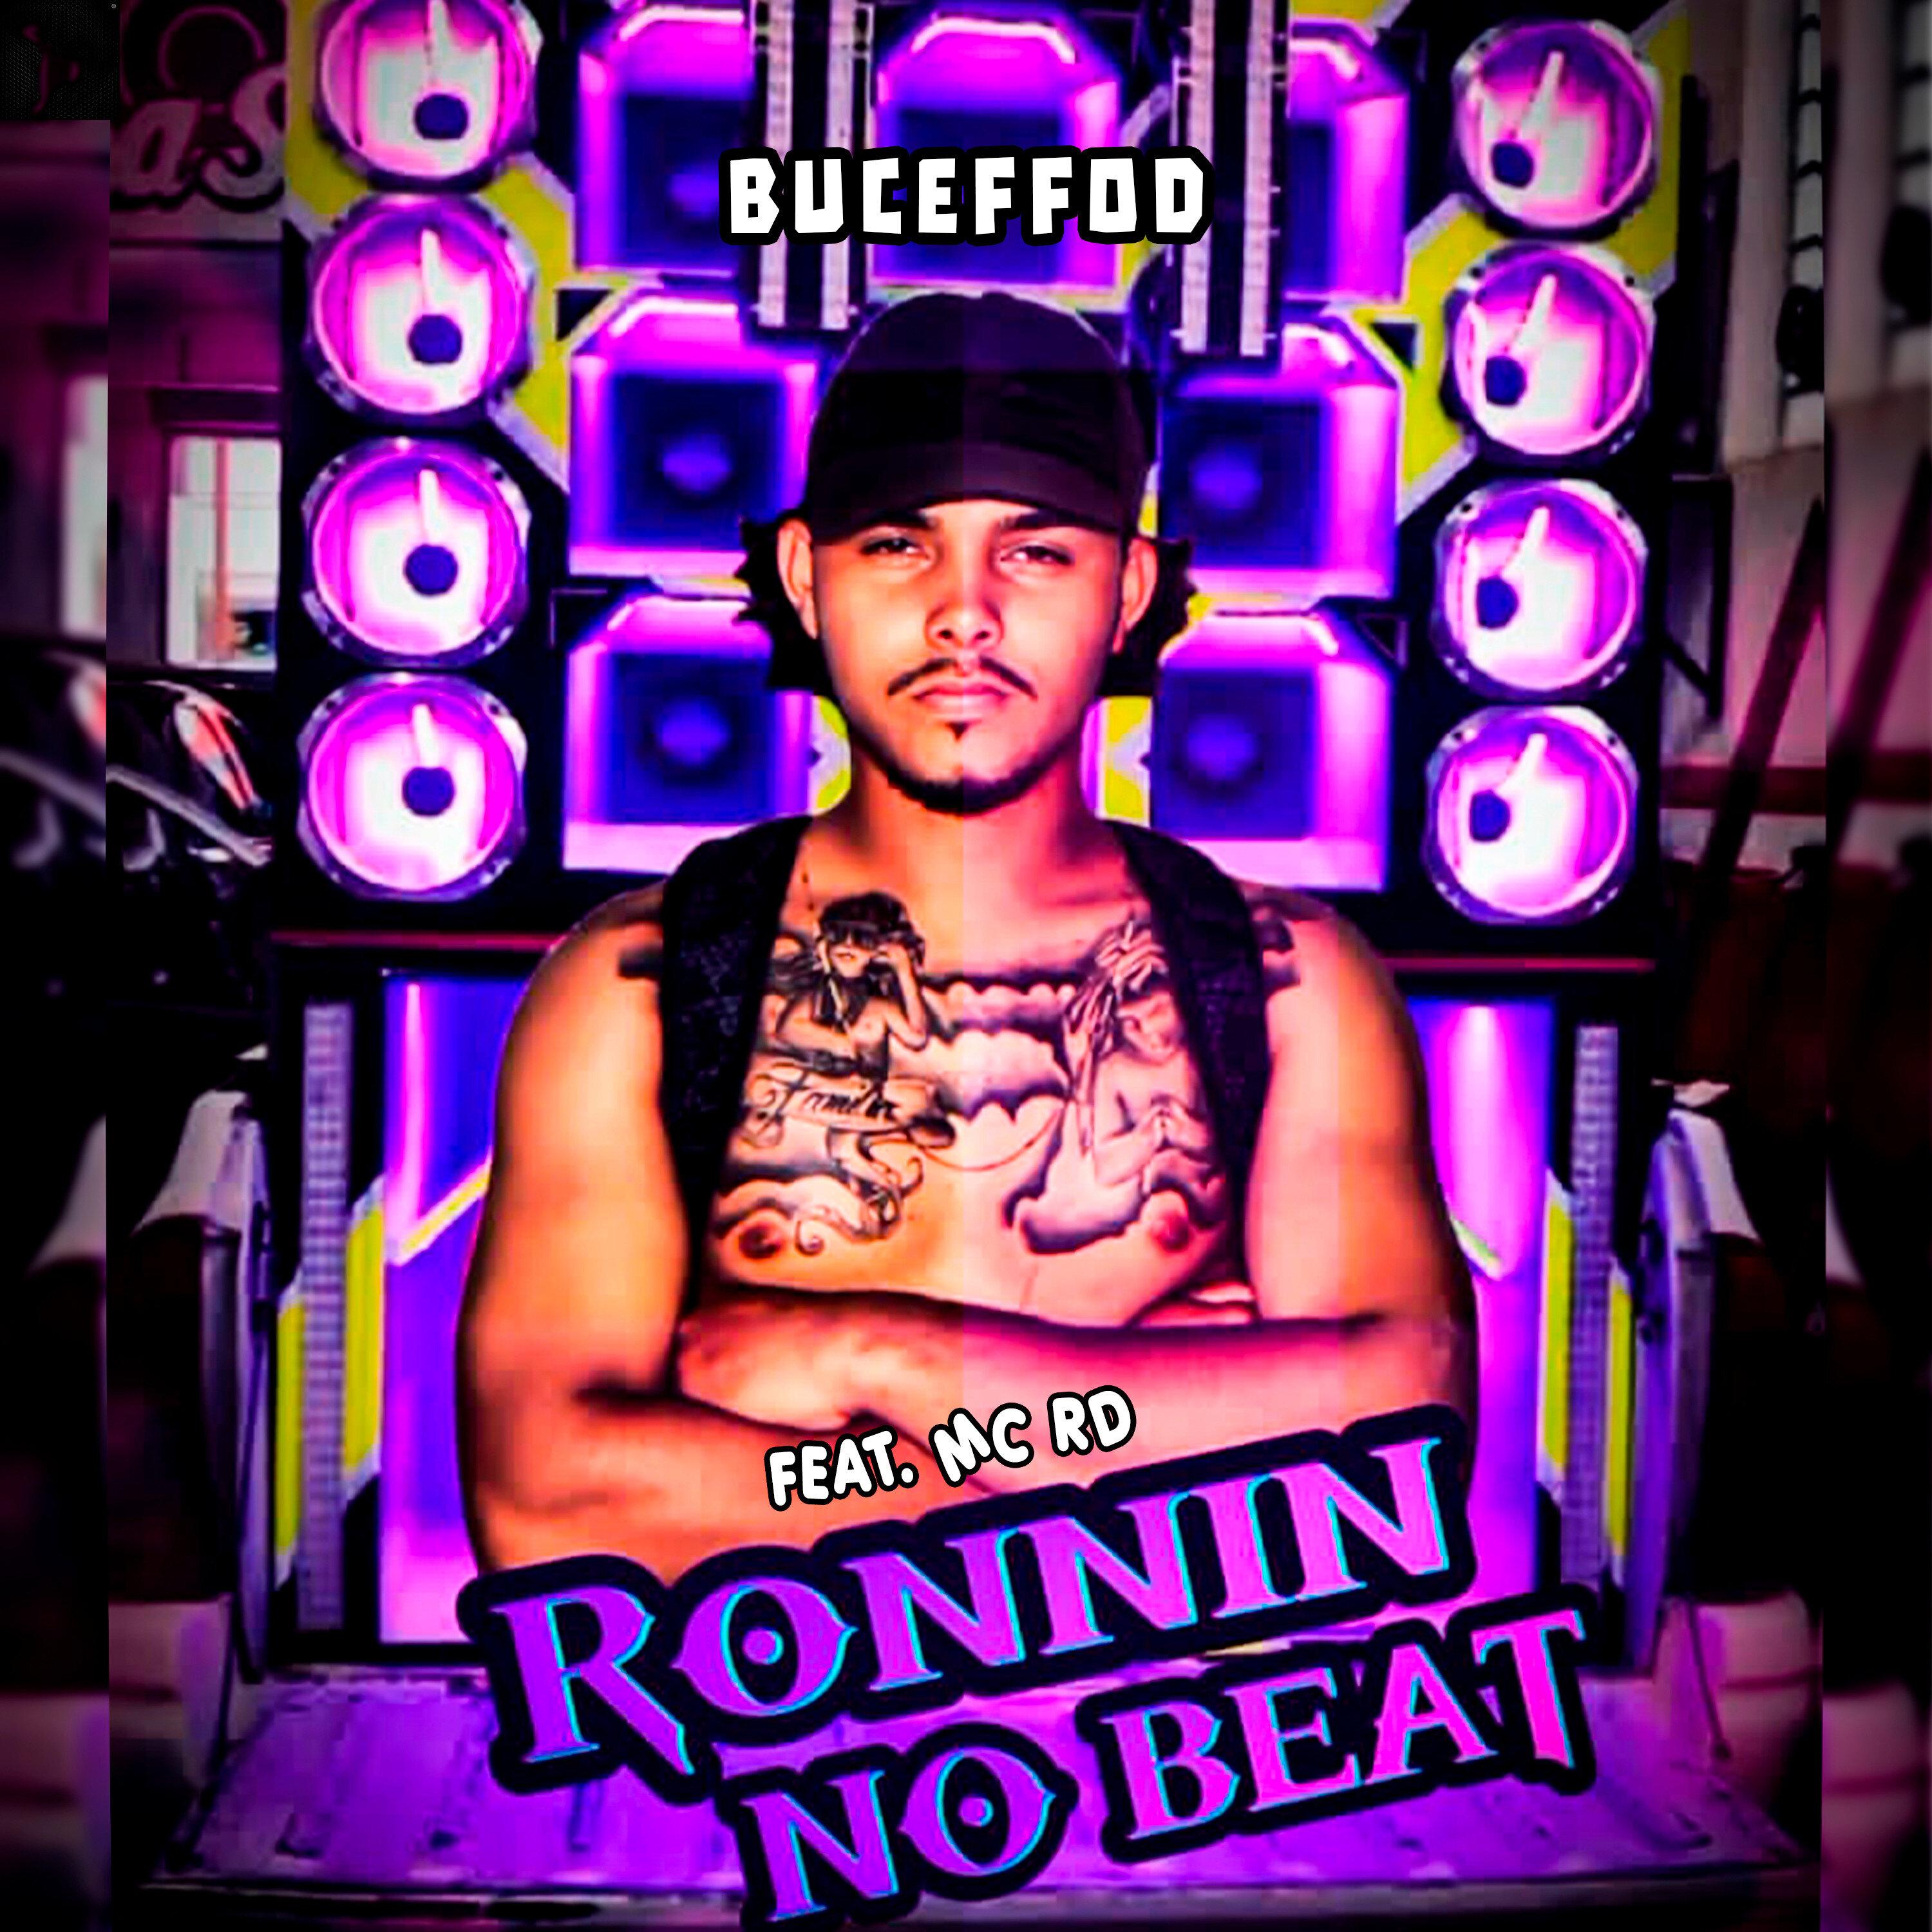 Ronnin No Beat - Buceffod (feat. Mc Rd)